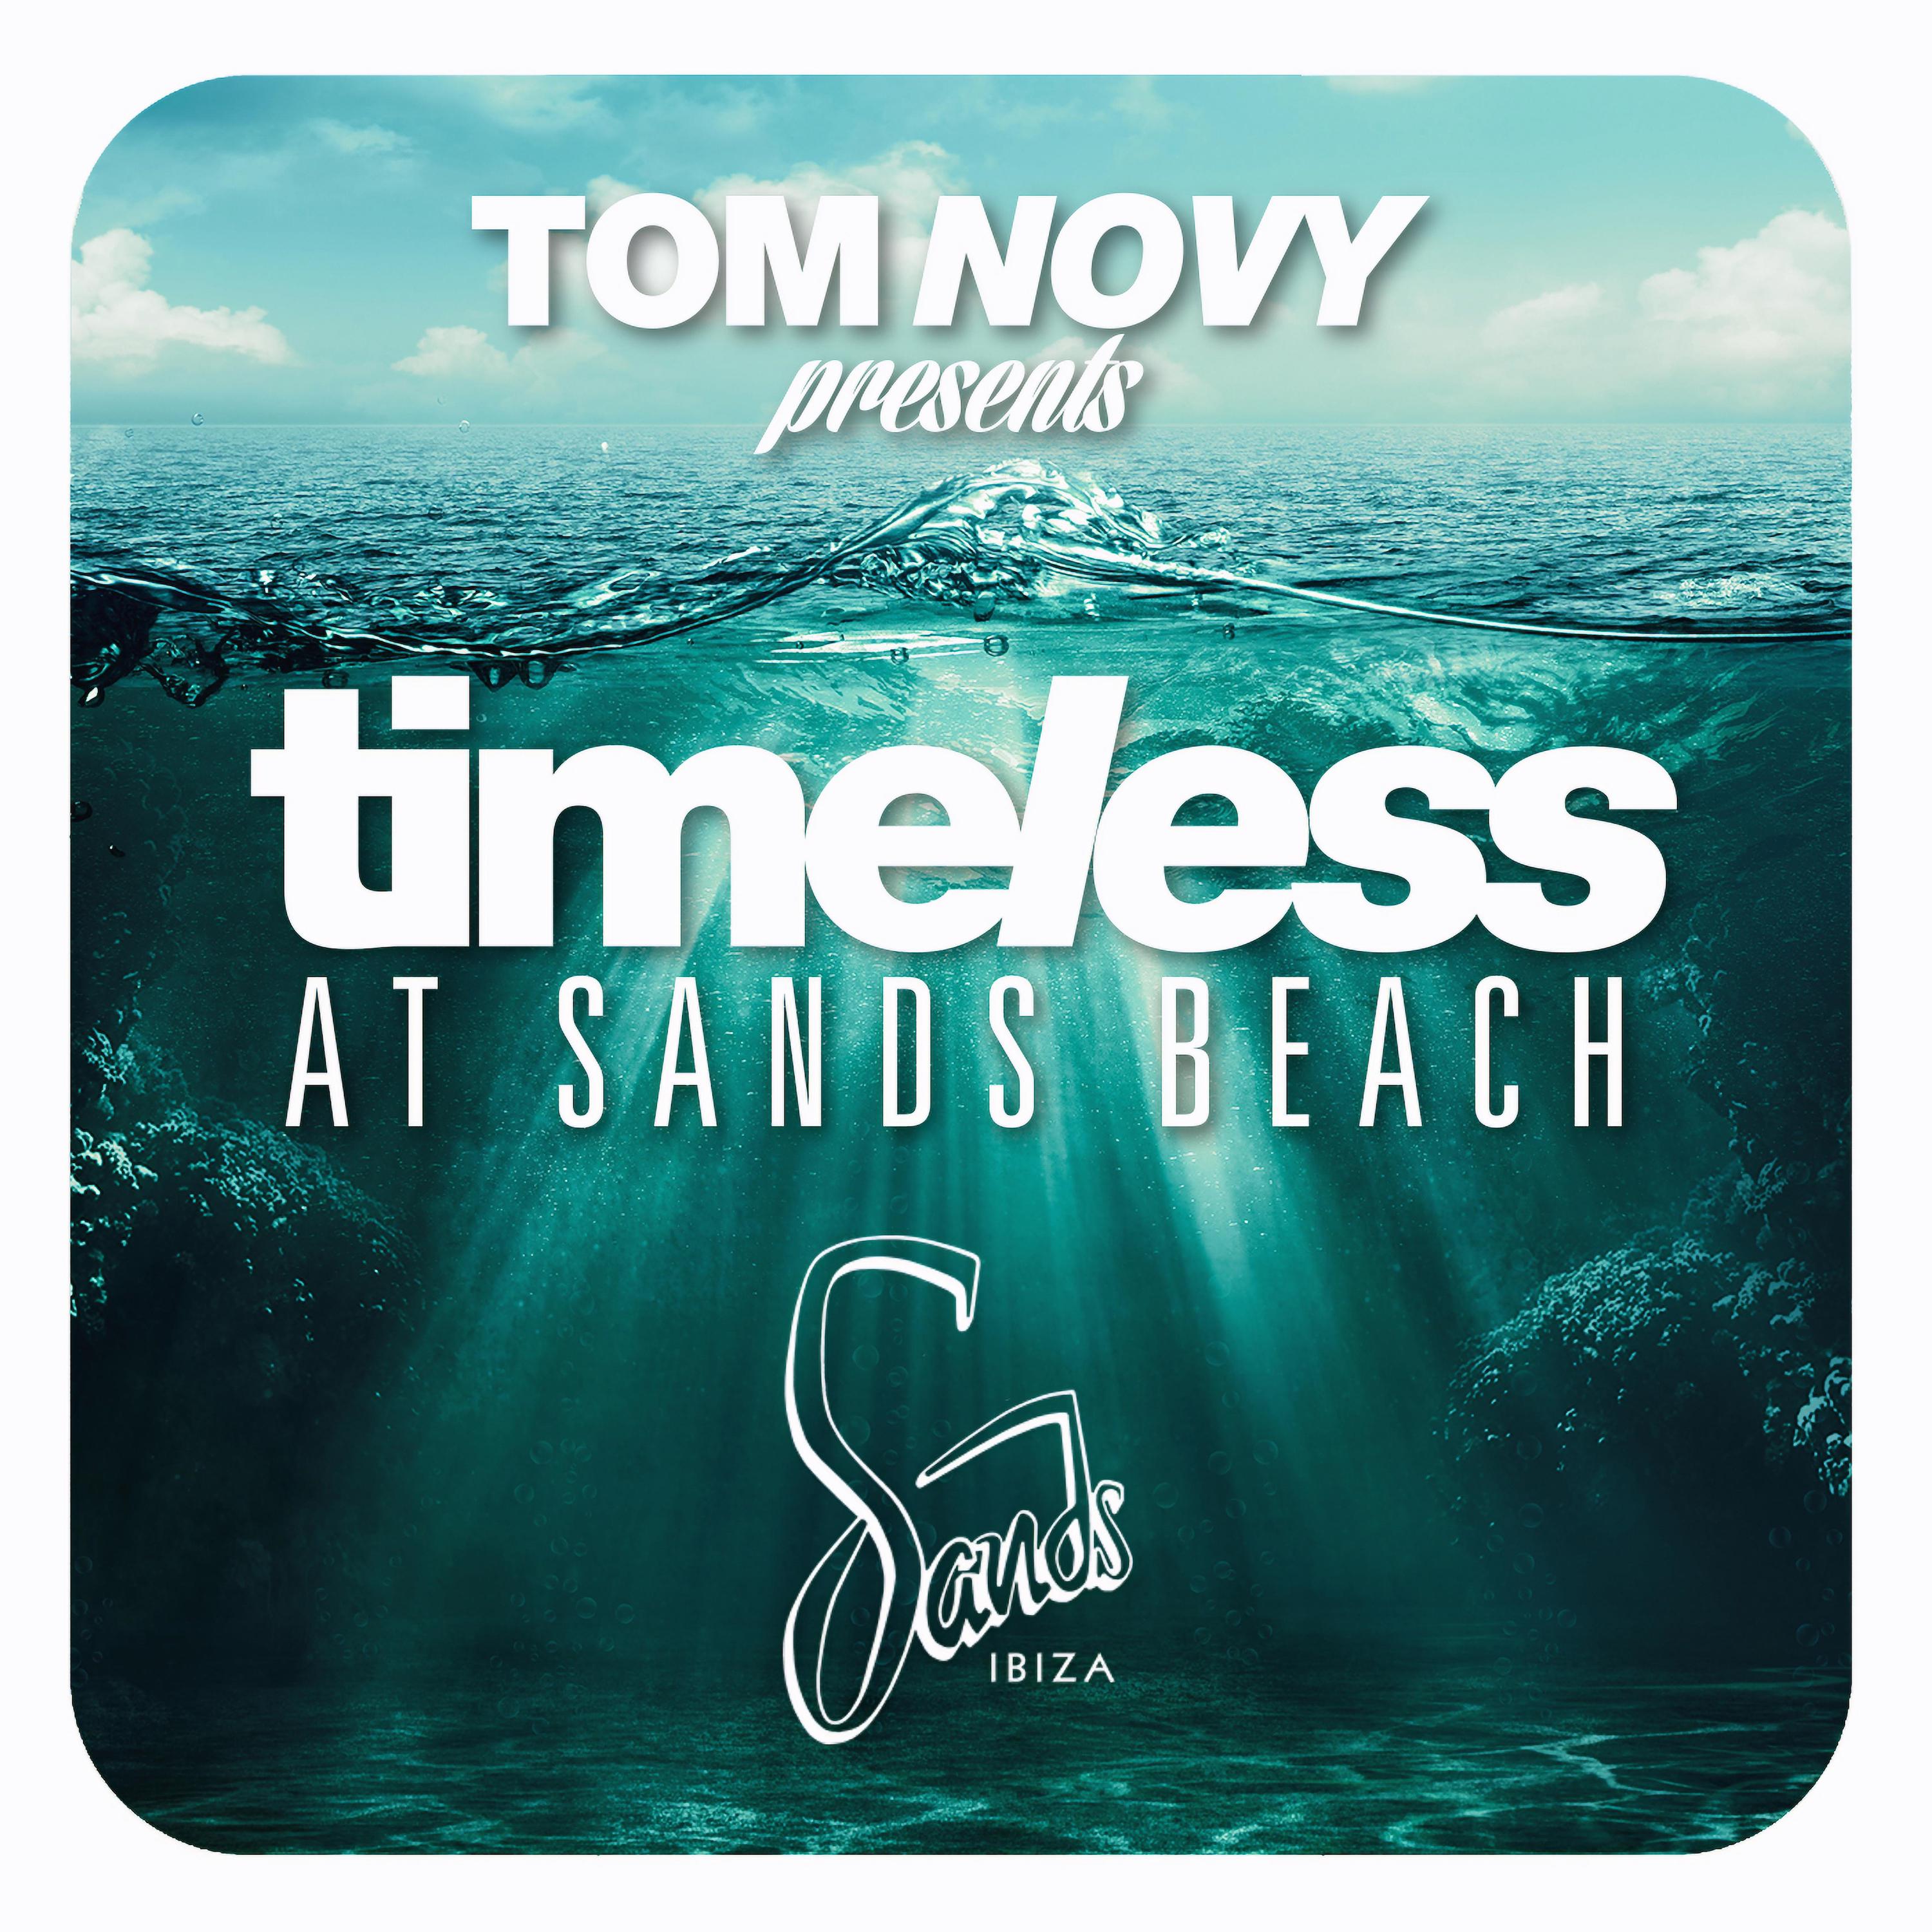 Tom Novy Presents Timeless At Sands Beach